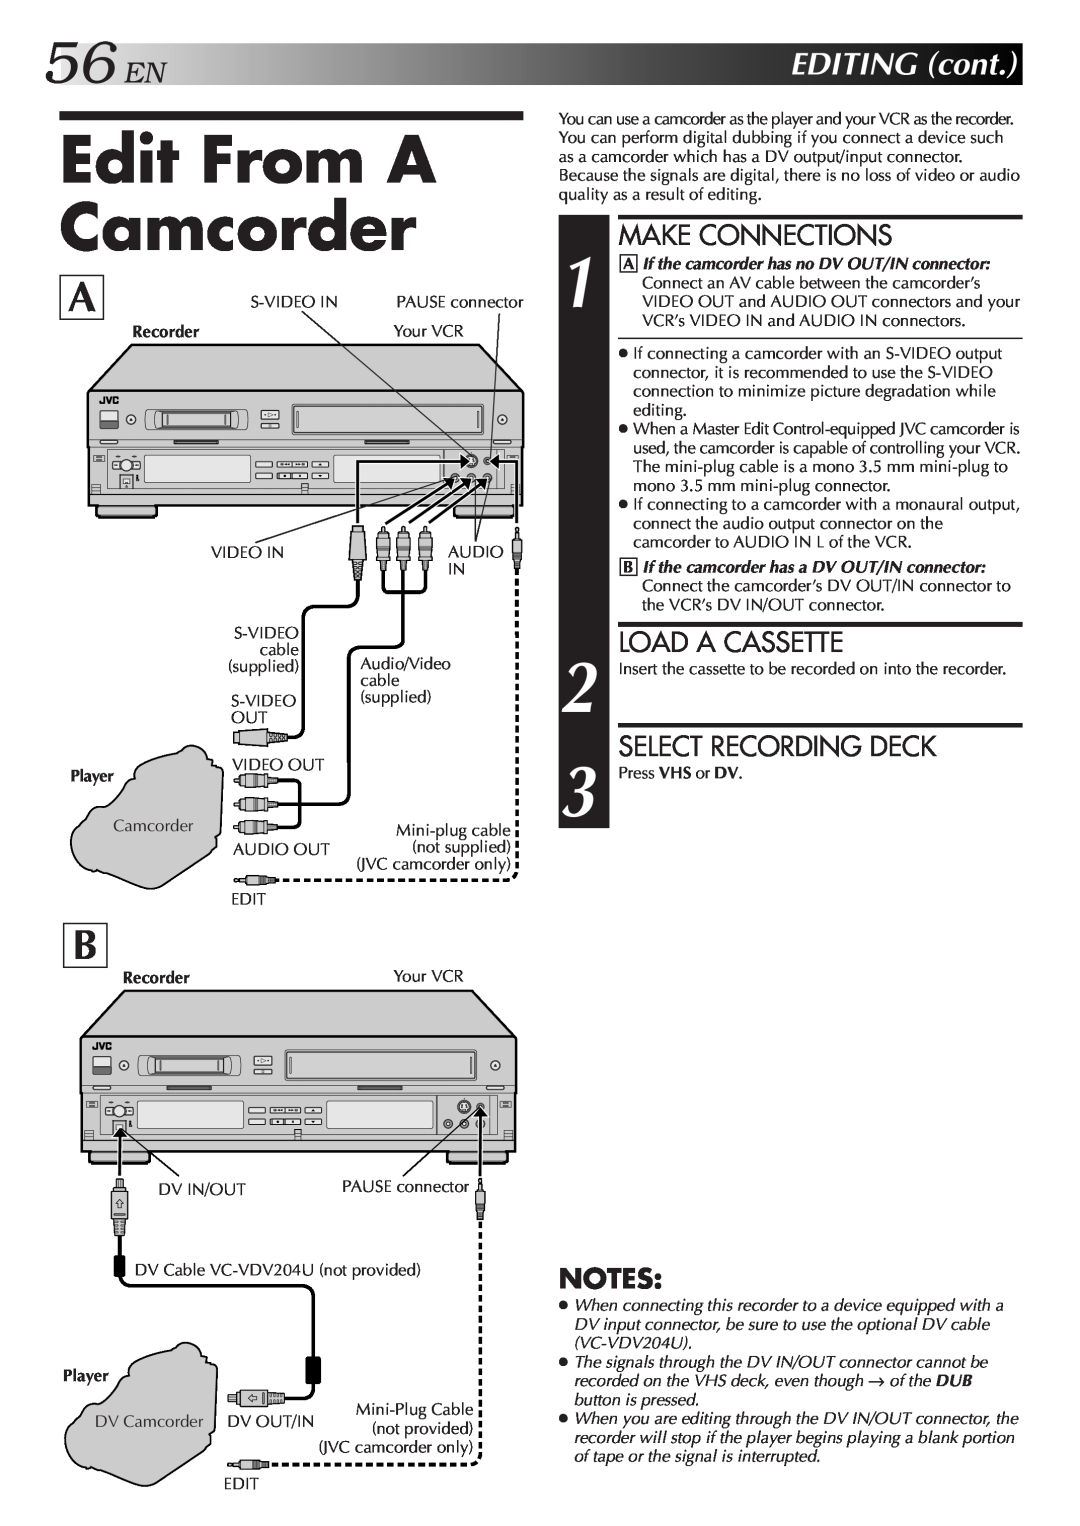 JVC Model HR-DVS1U Edit From A Camcorder, 56EN, Make Connections, Load A Cassette, Select Recording Deck, EDITINGcont 